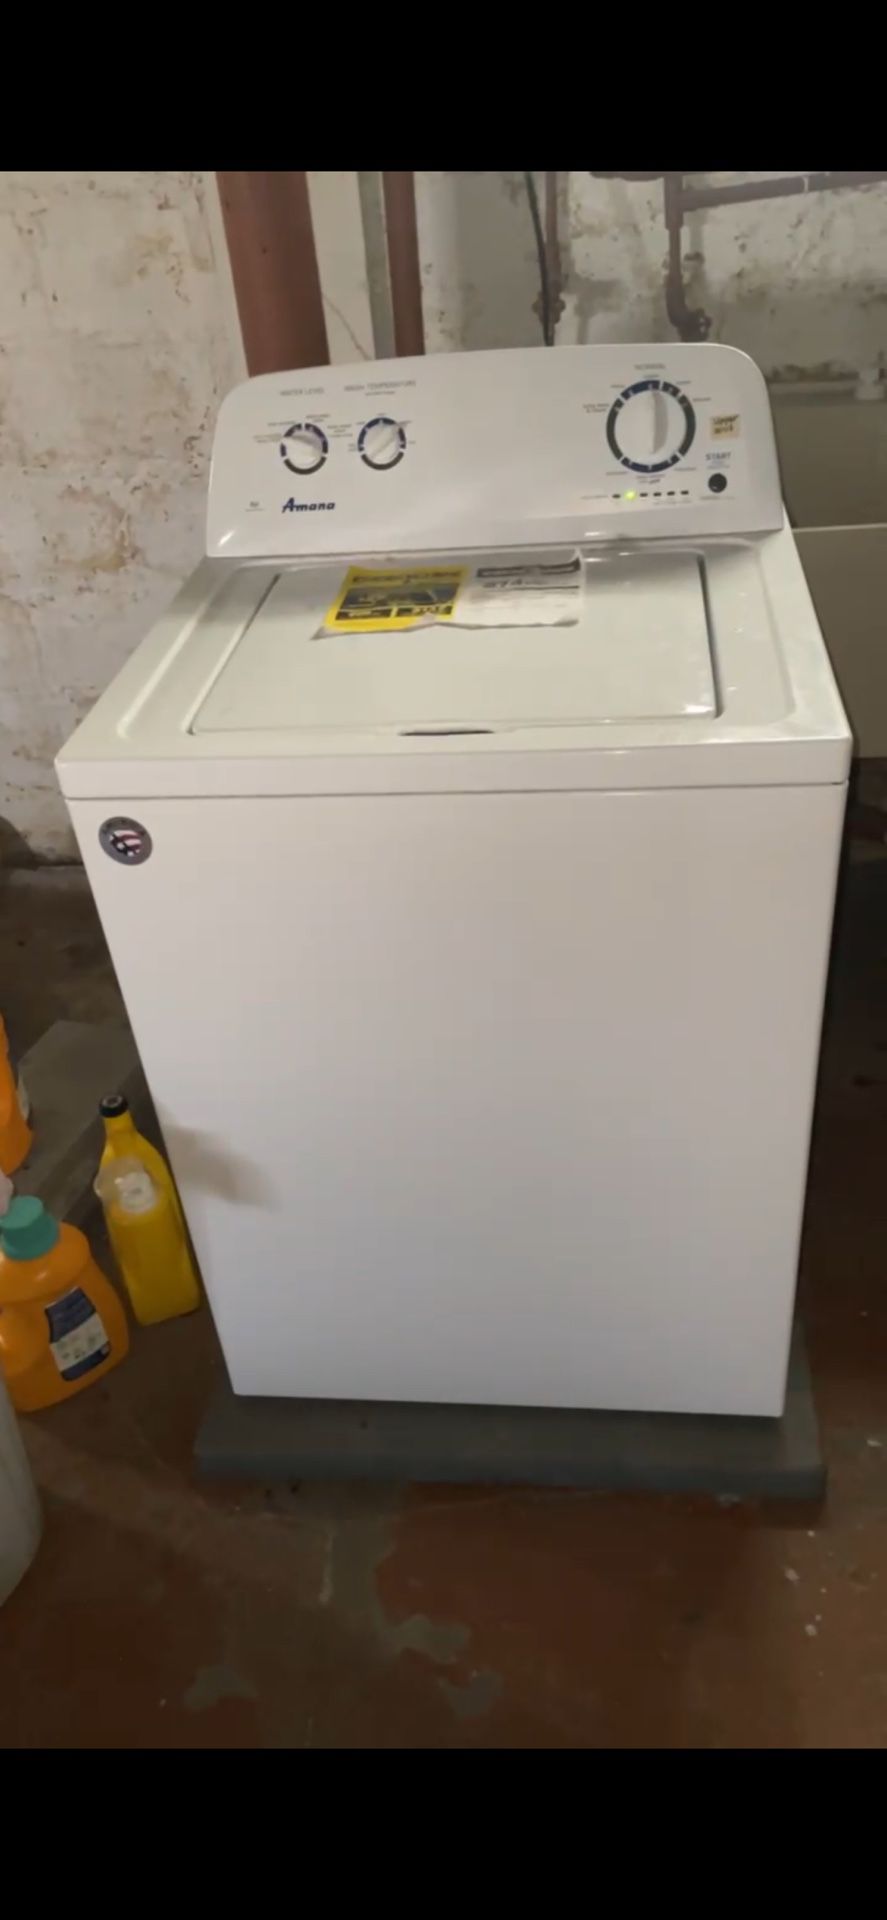 Amana Washing Machine - $100